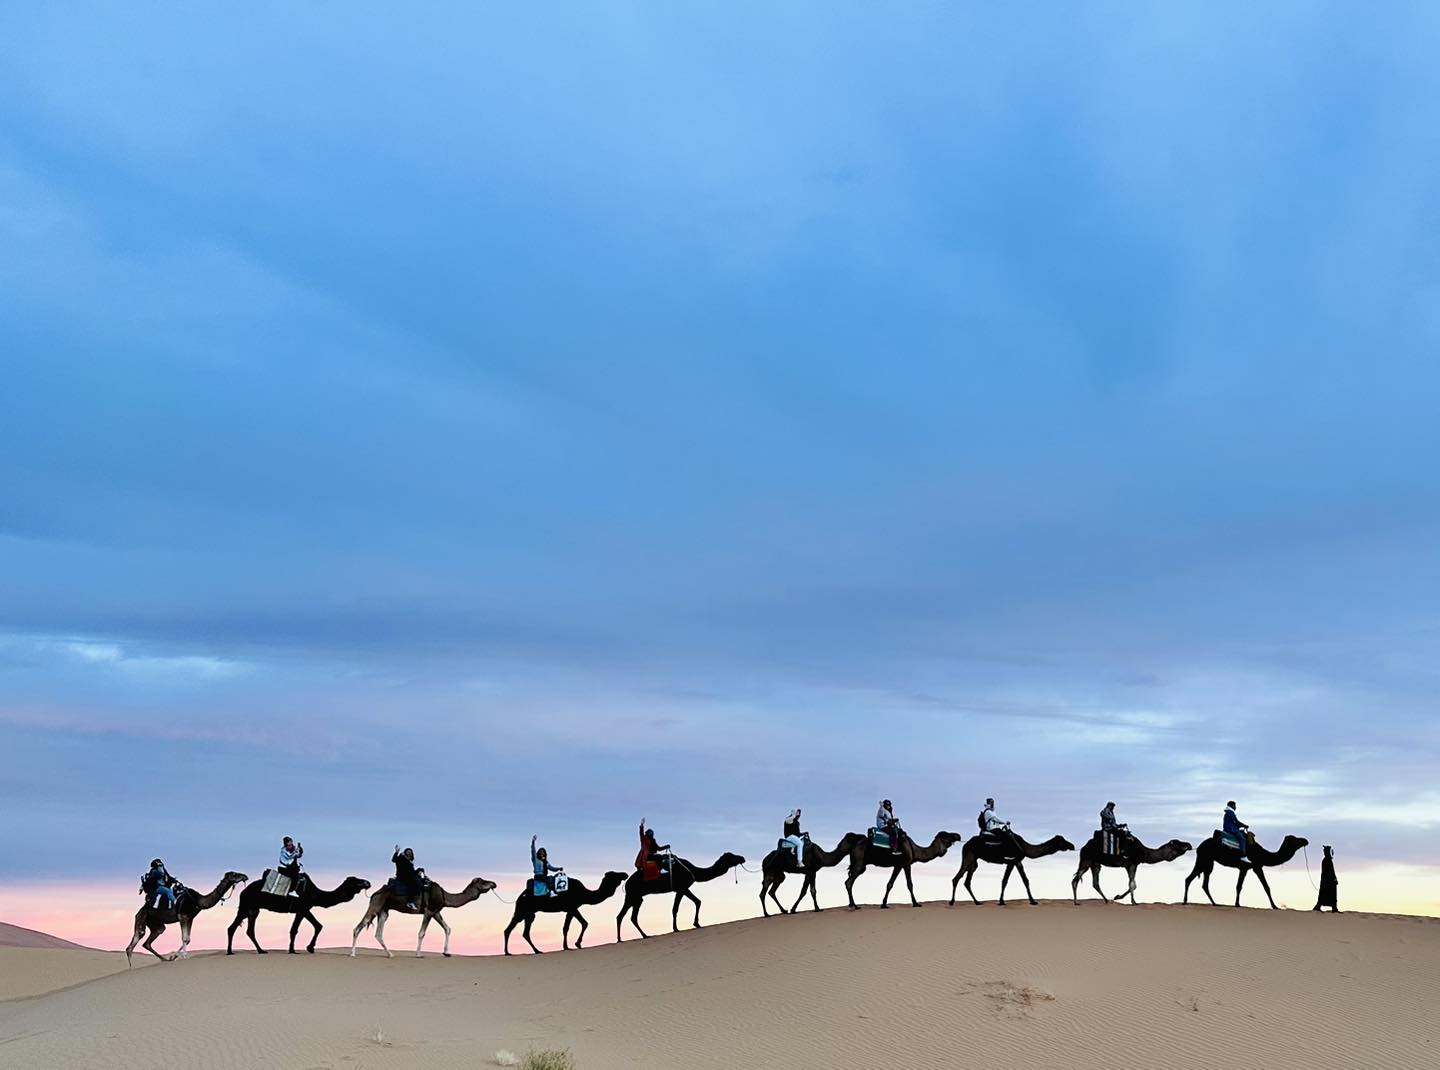 3-Day Tour From Fez to Marrakech - Camel Trekking